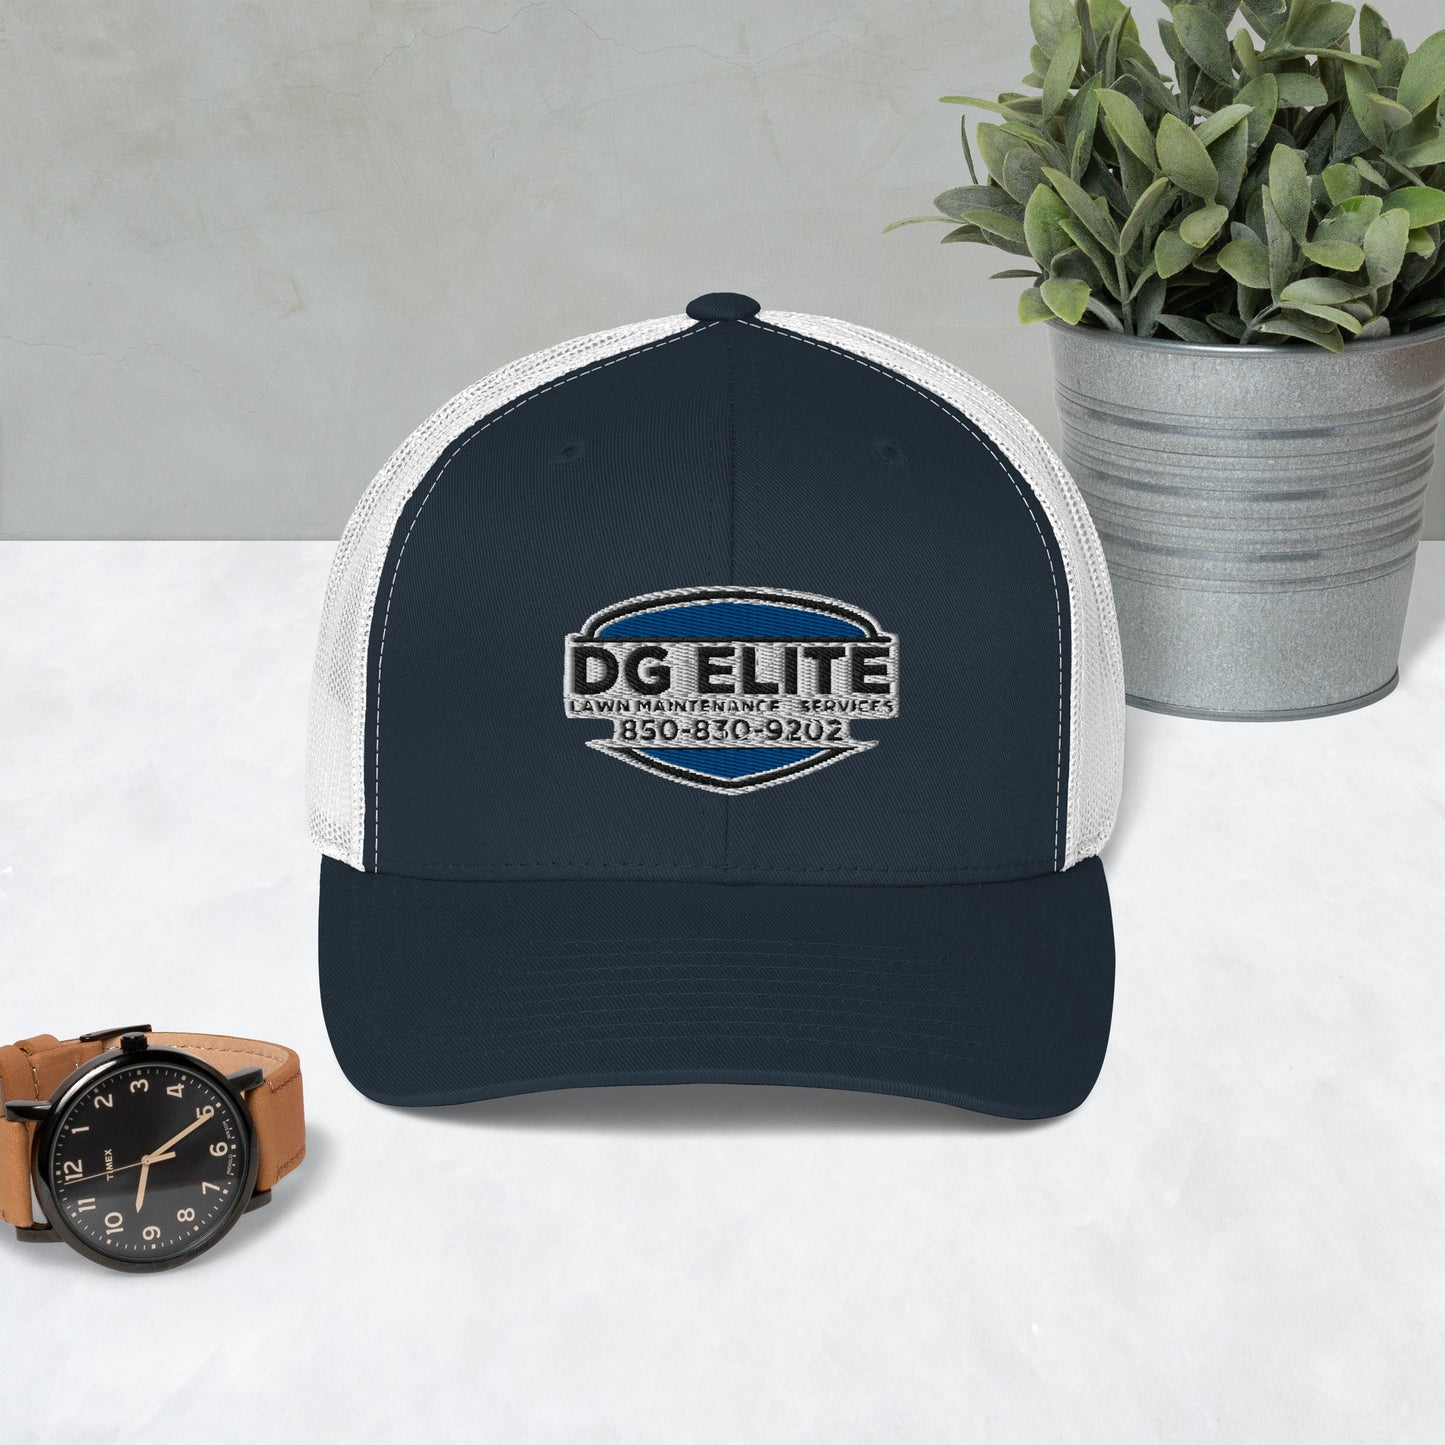 DG Elite New Logo Trucker Cap